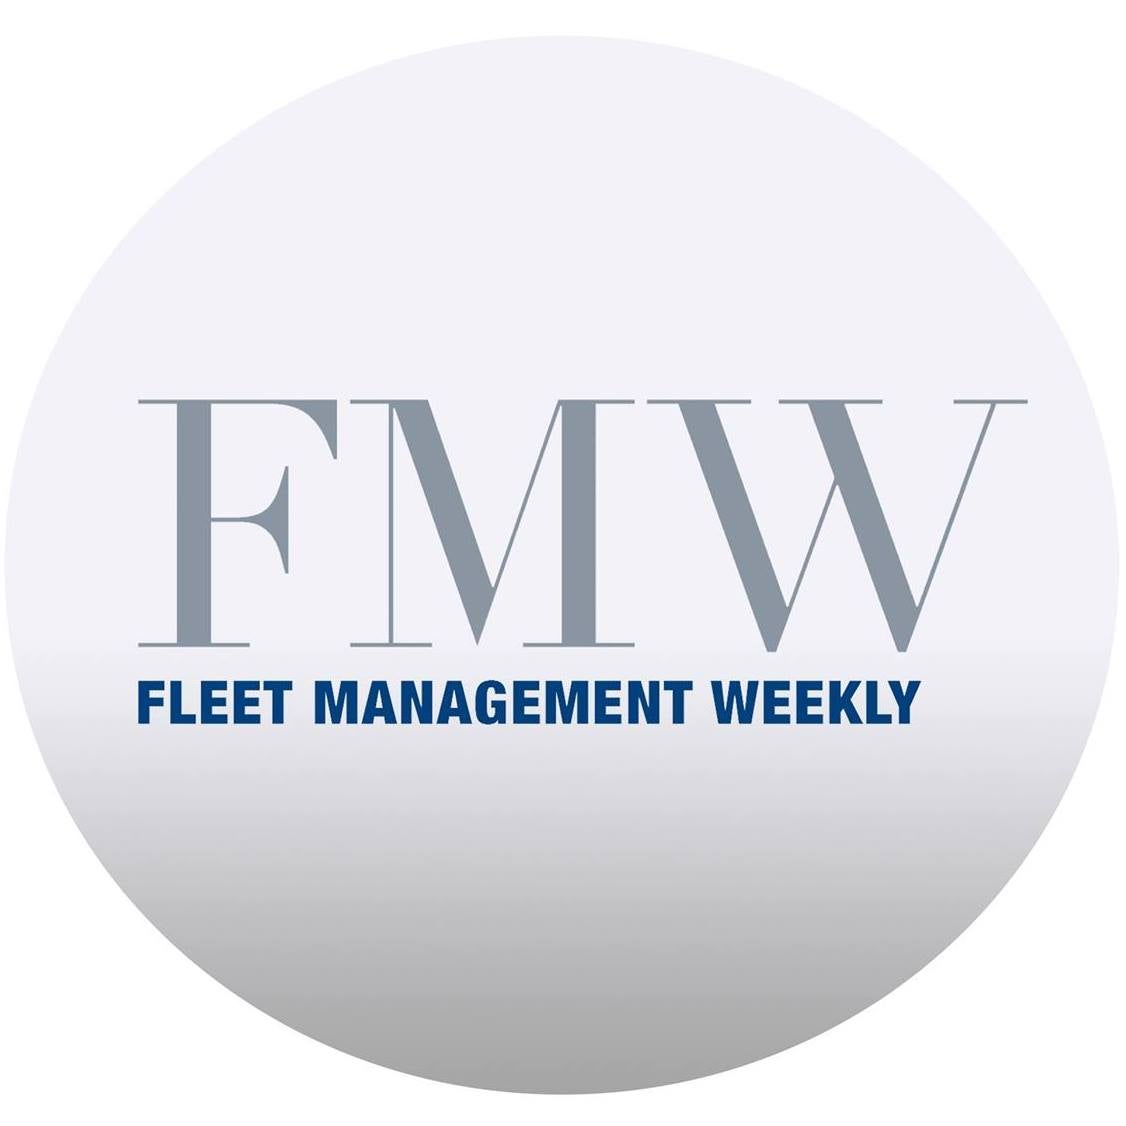 fleet management weekly logo